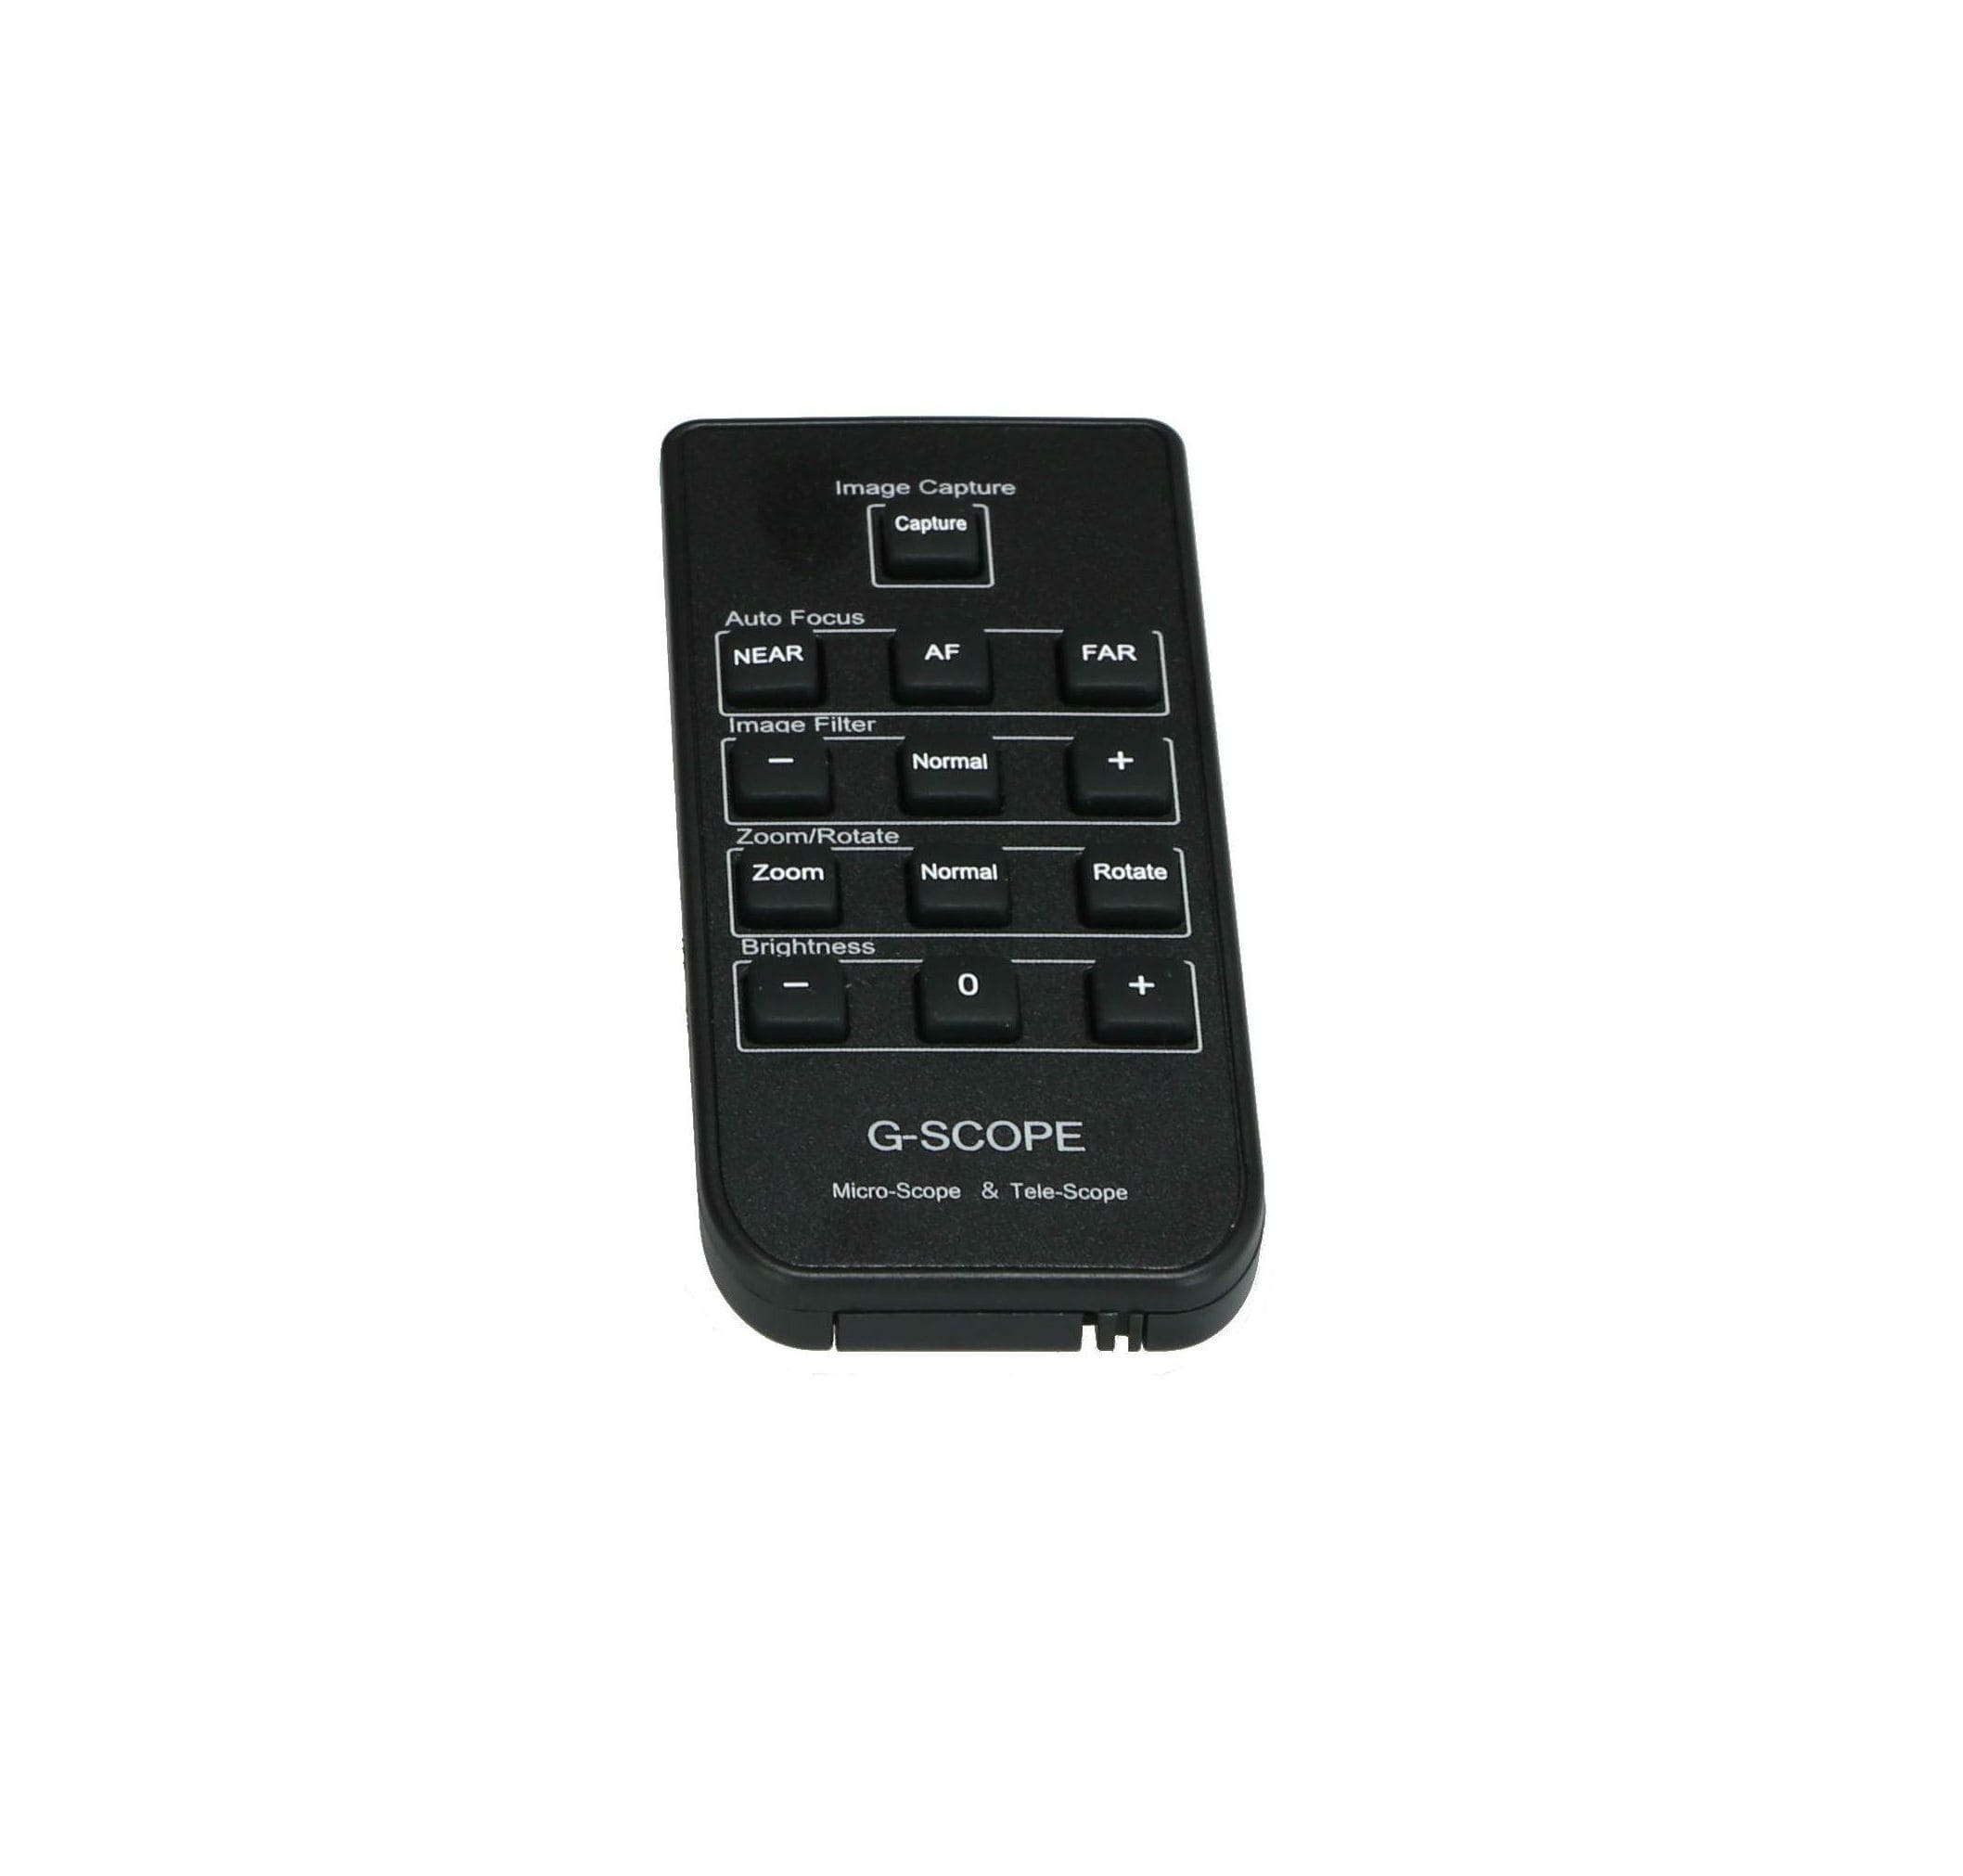 Smart G-Scope Capillaroscope remote controller